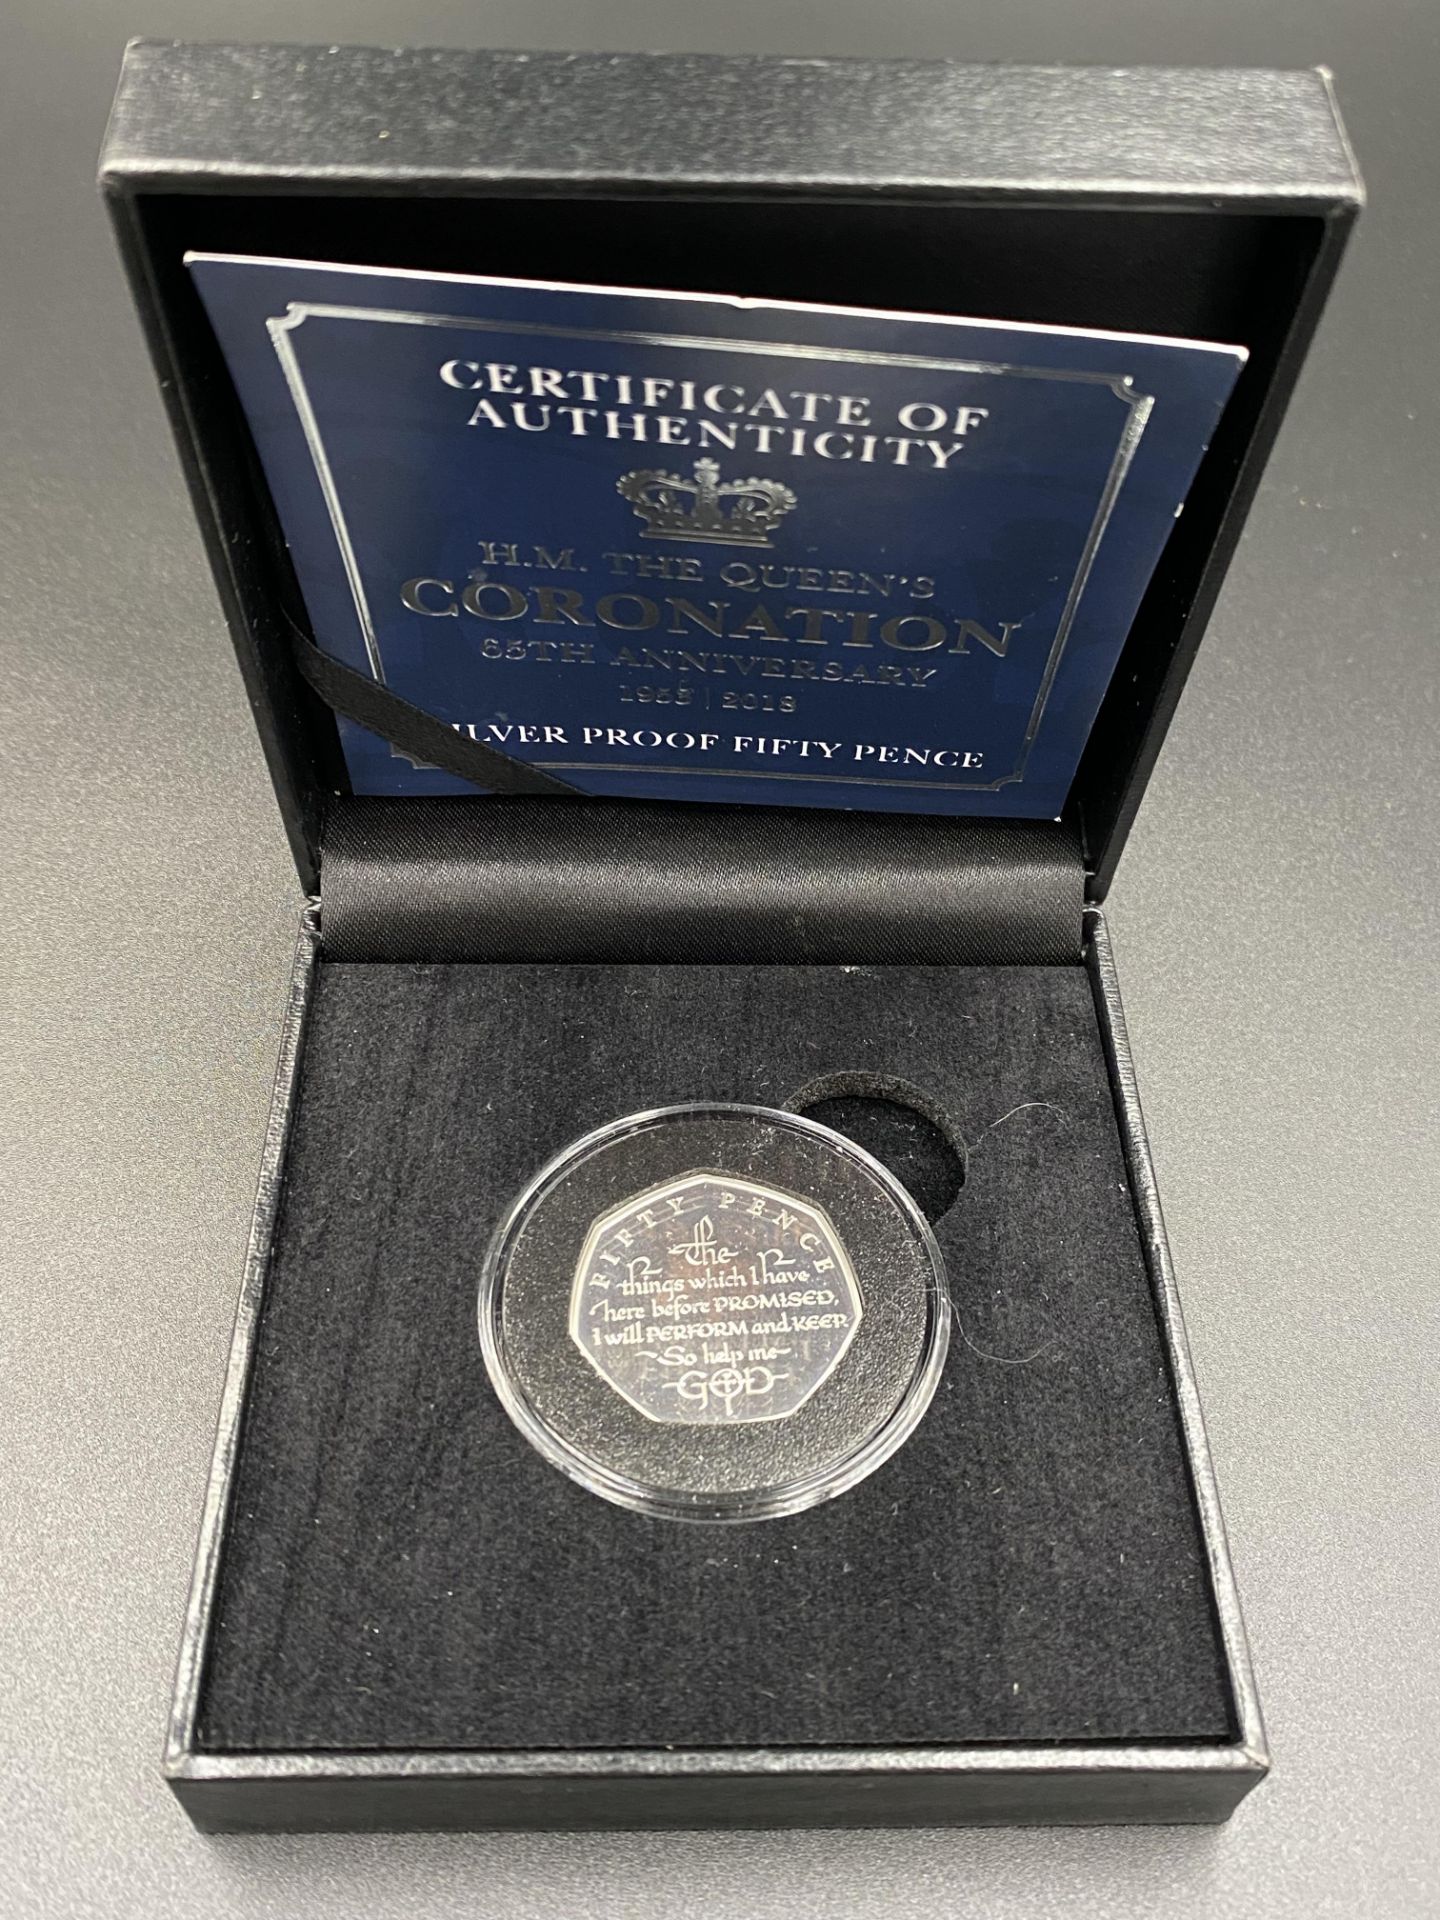 Queen Elizabeth Platinum Wedding Anniversary silver proof coin set - Image 6 of 8